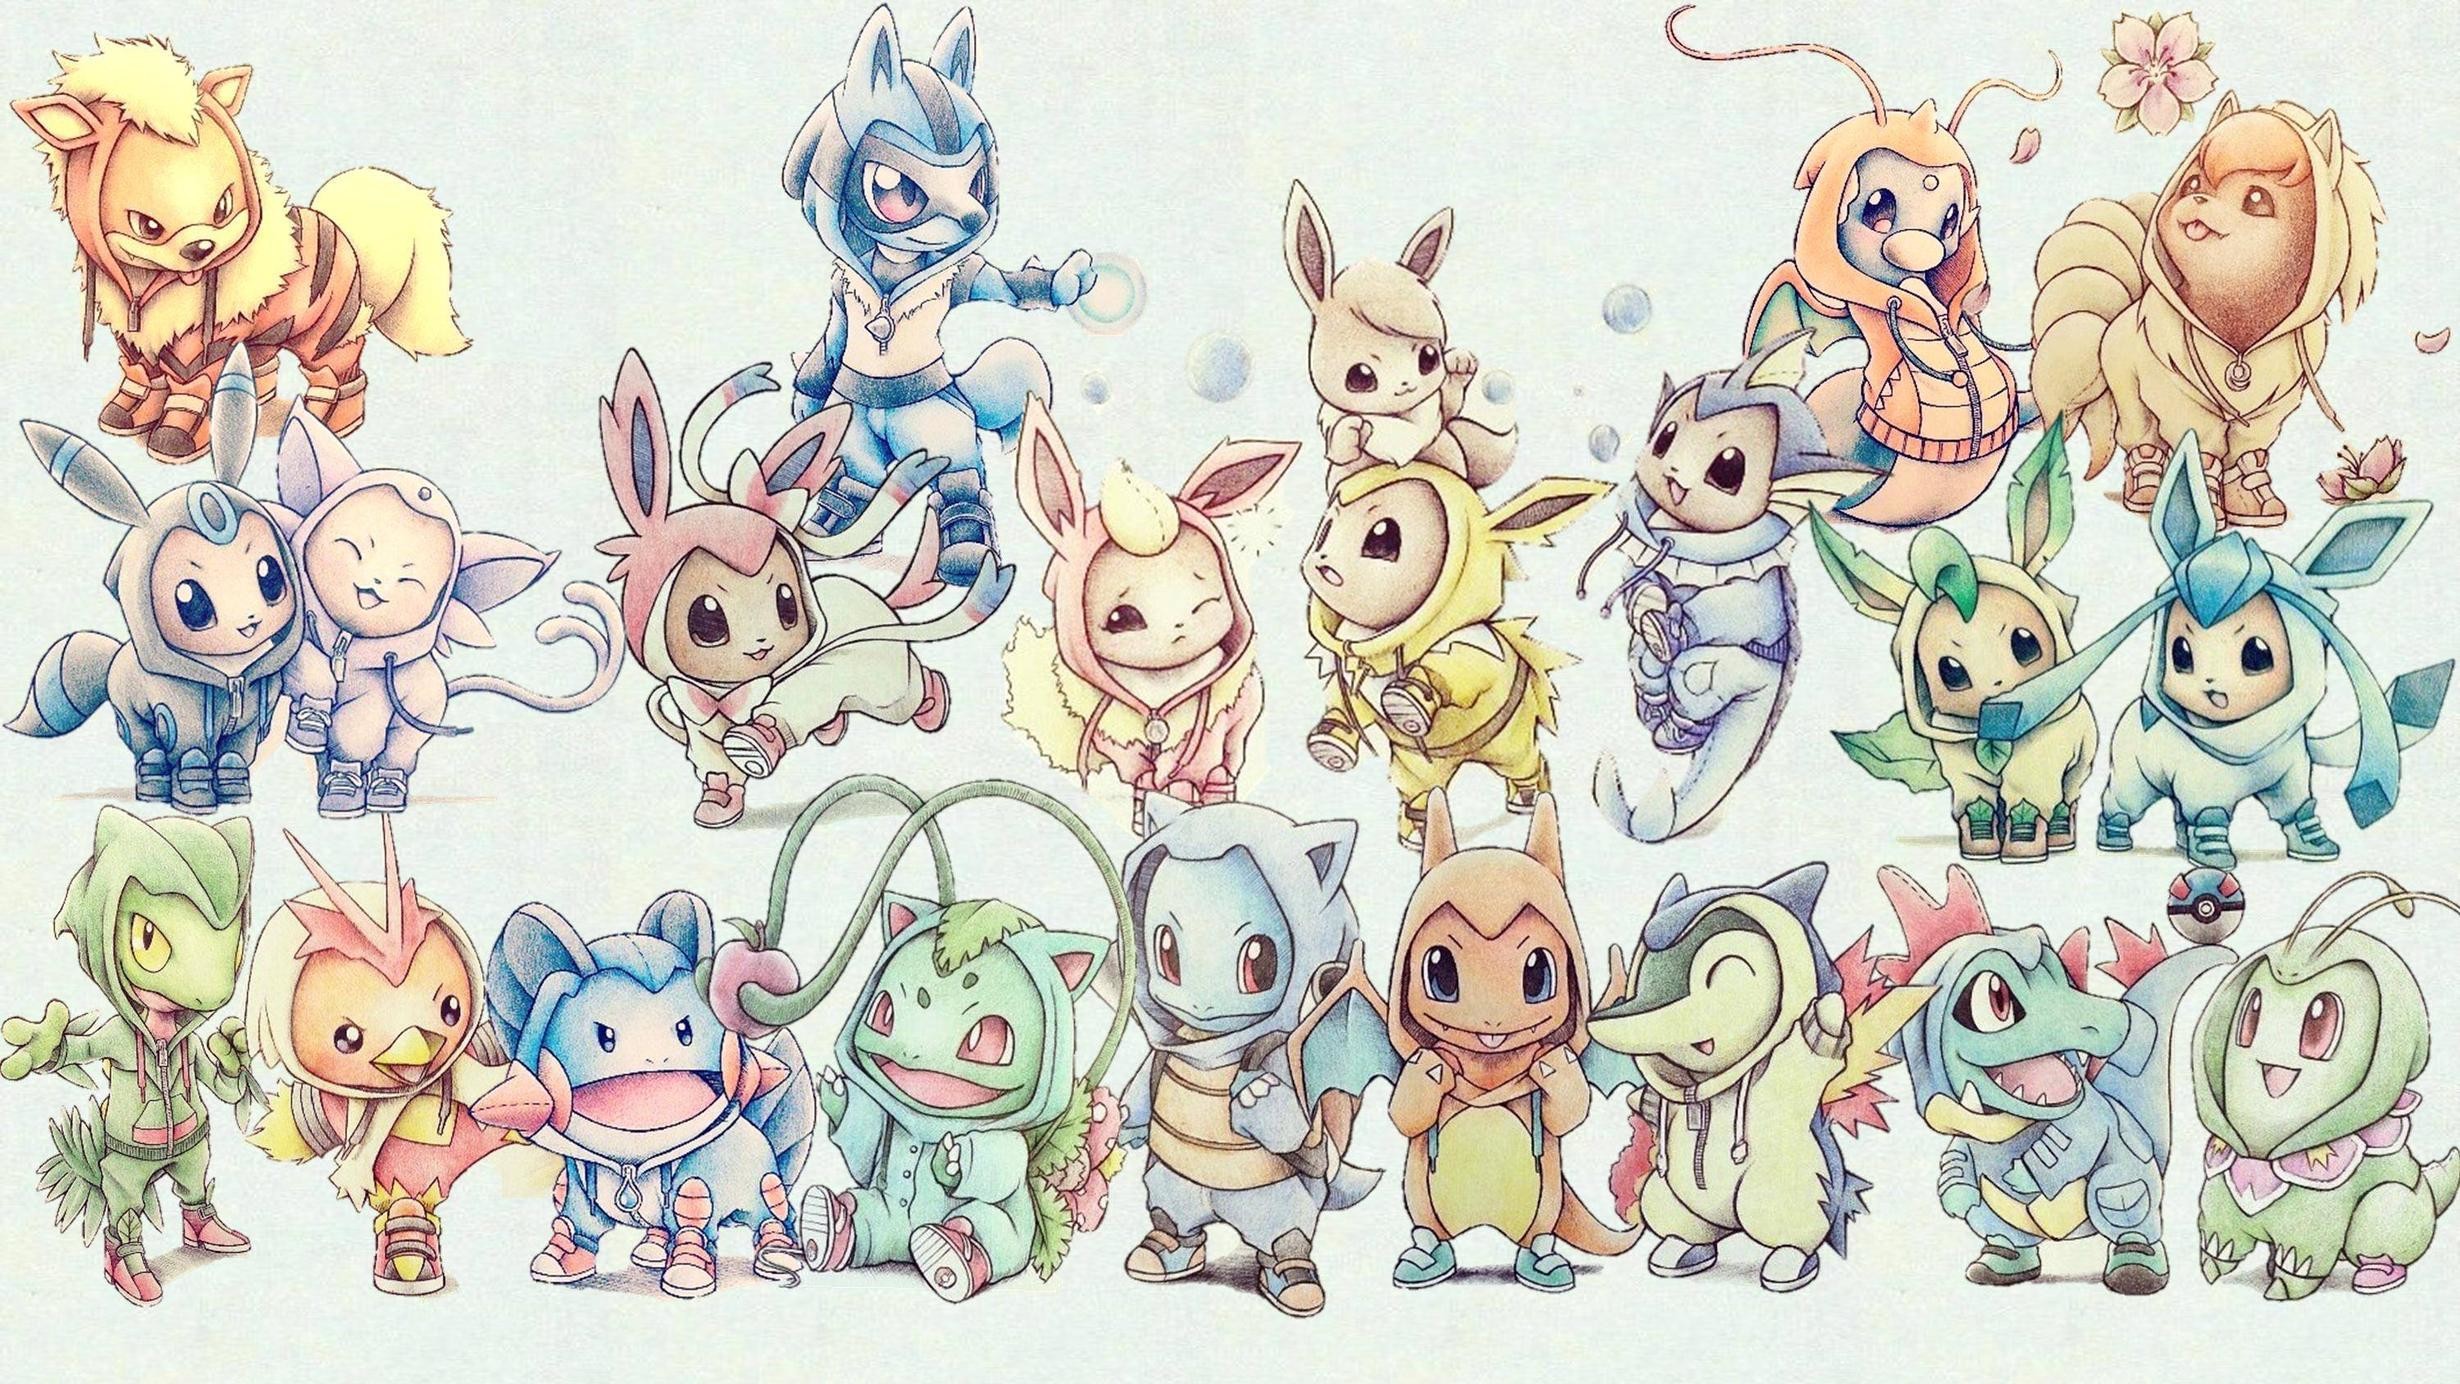 2460x1384 Cute Pokemon Wallpaper Hd Wallpapers in Games 1024x768PX .